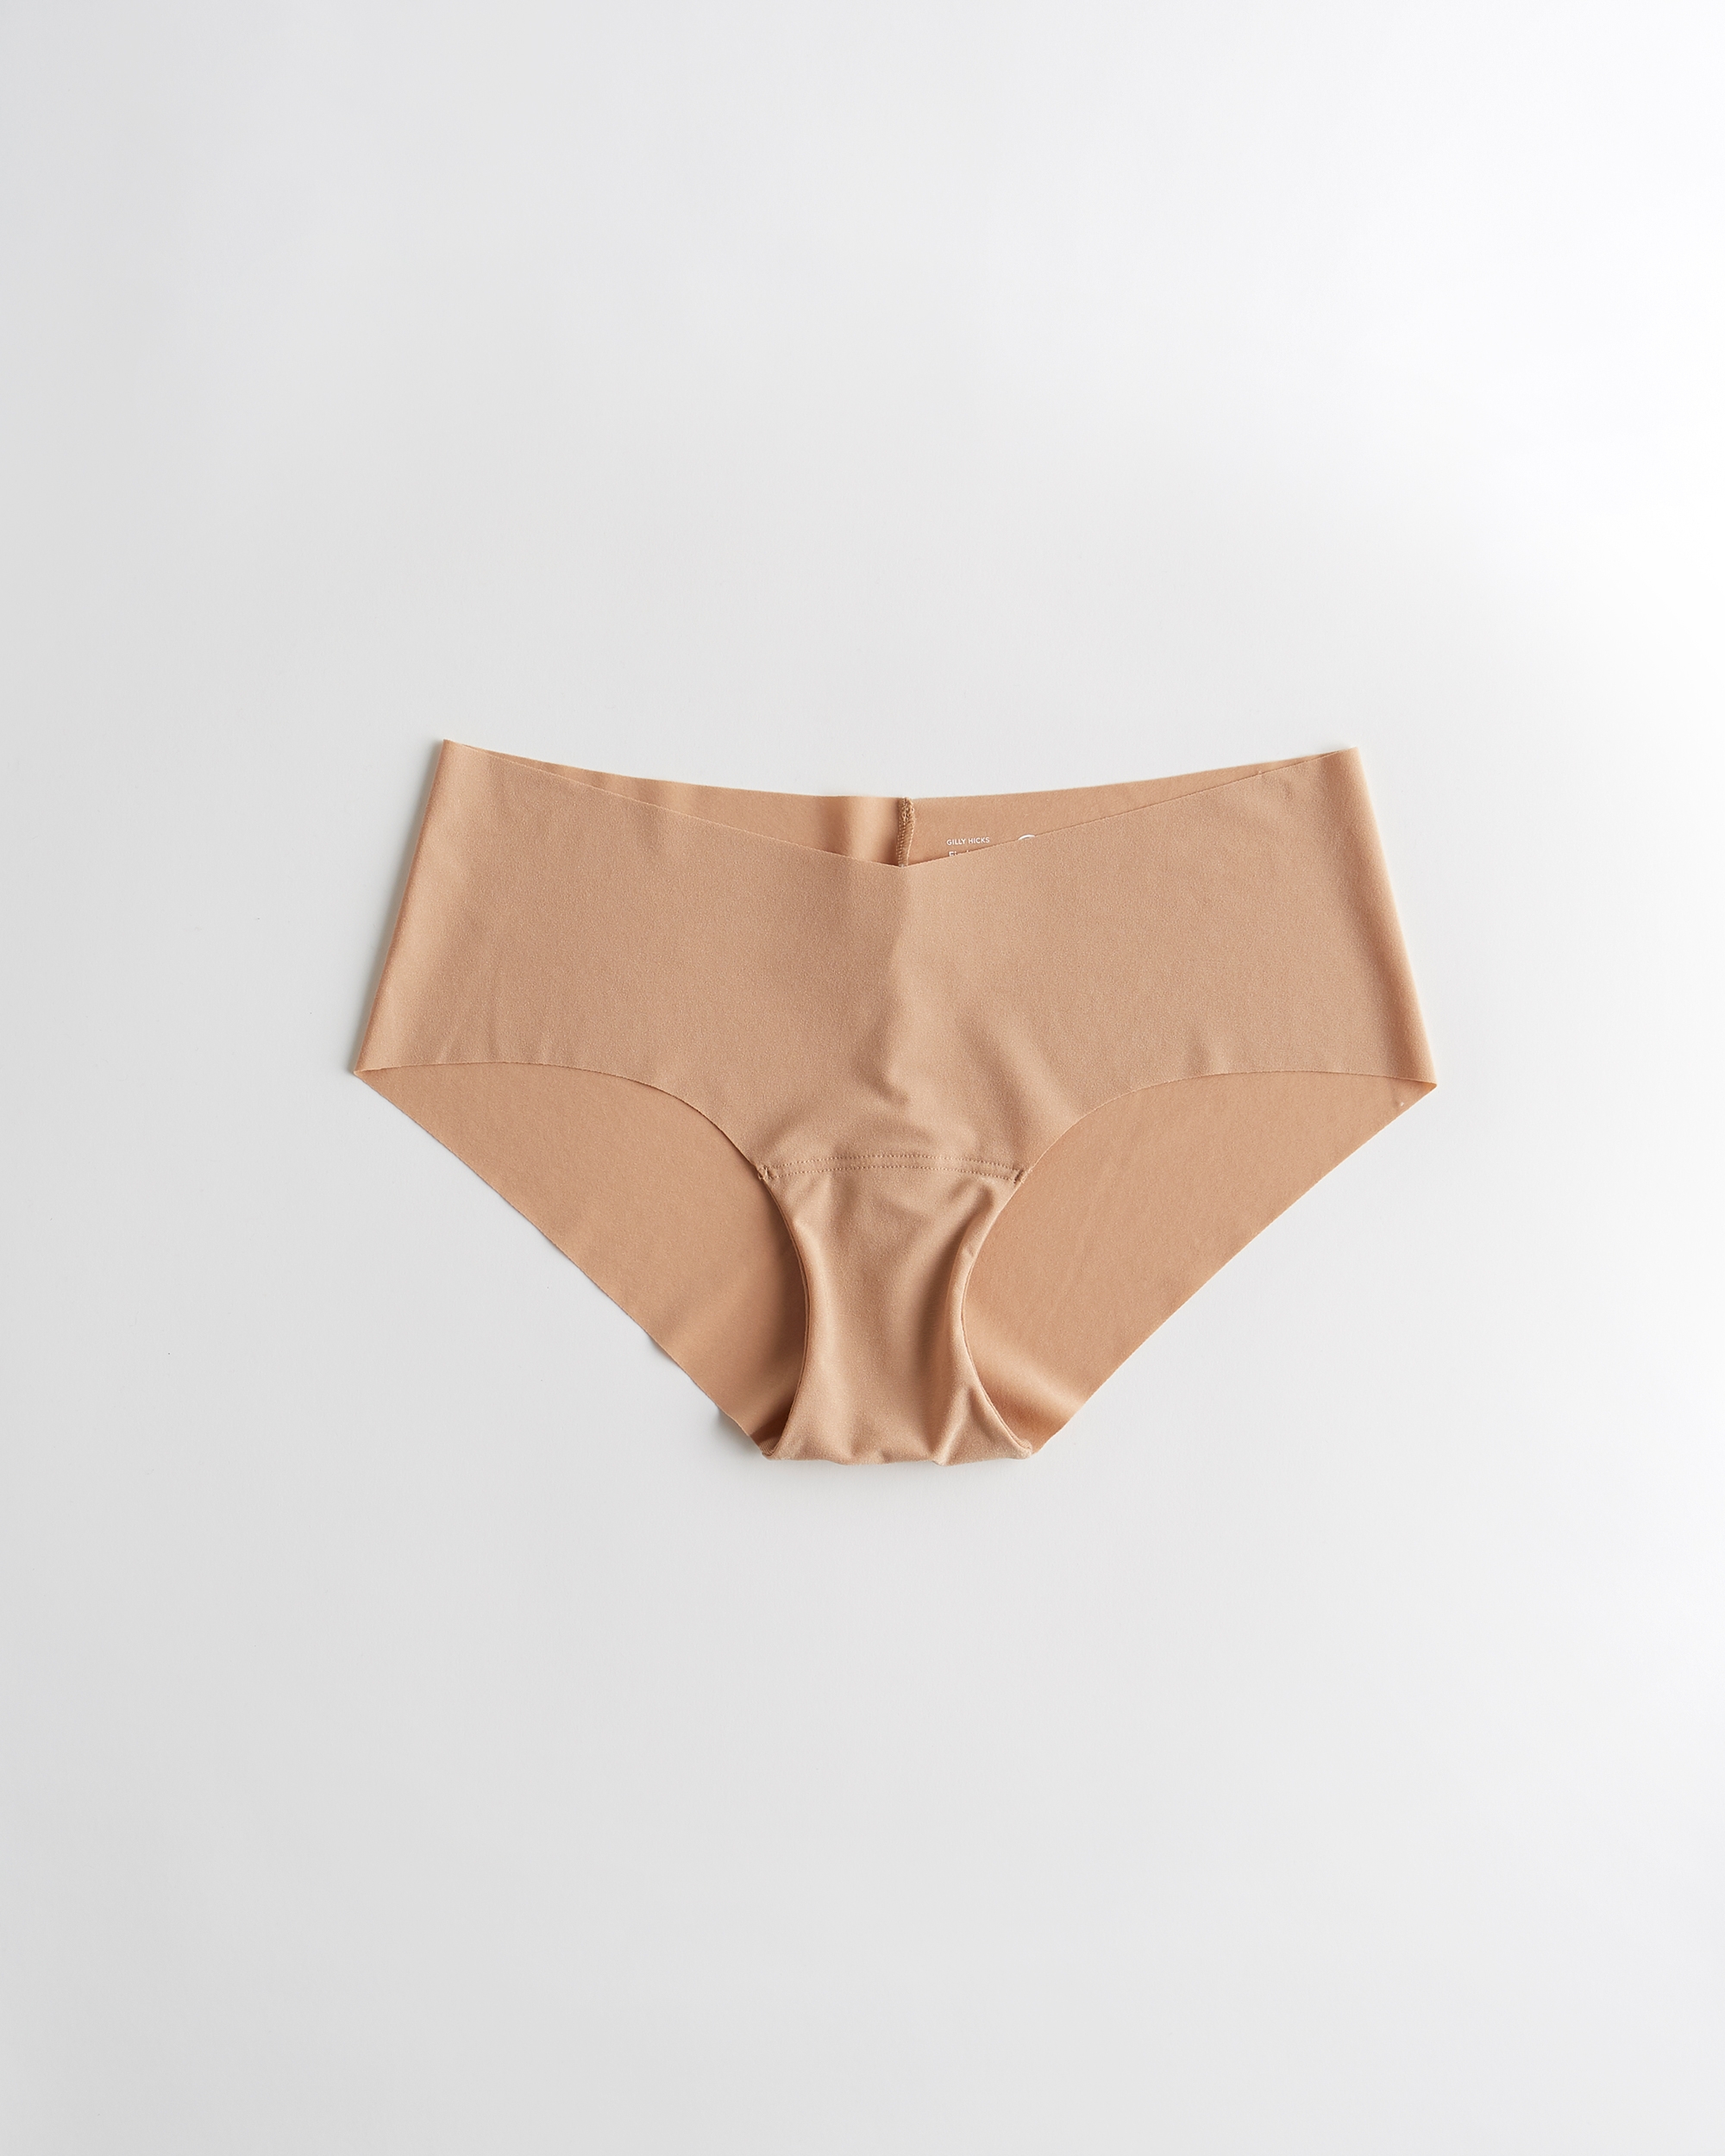 Hollister Gilly Hicks No-Show Thong Underwear